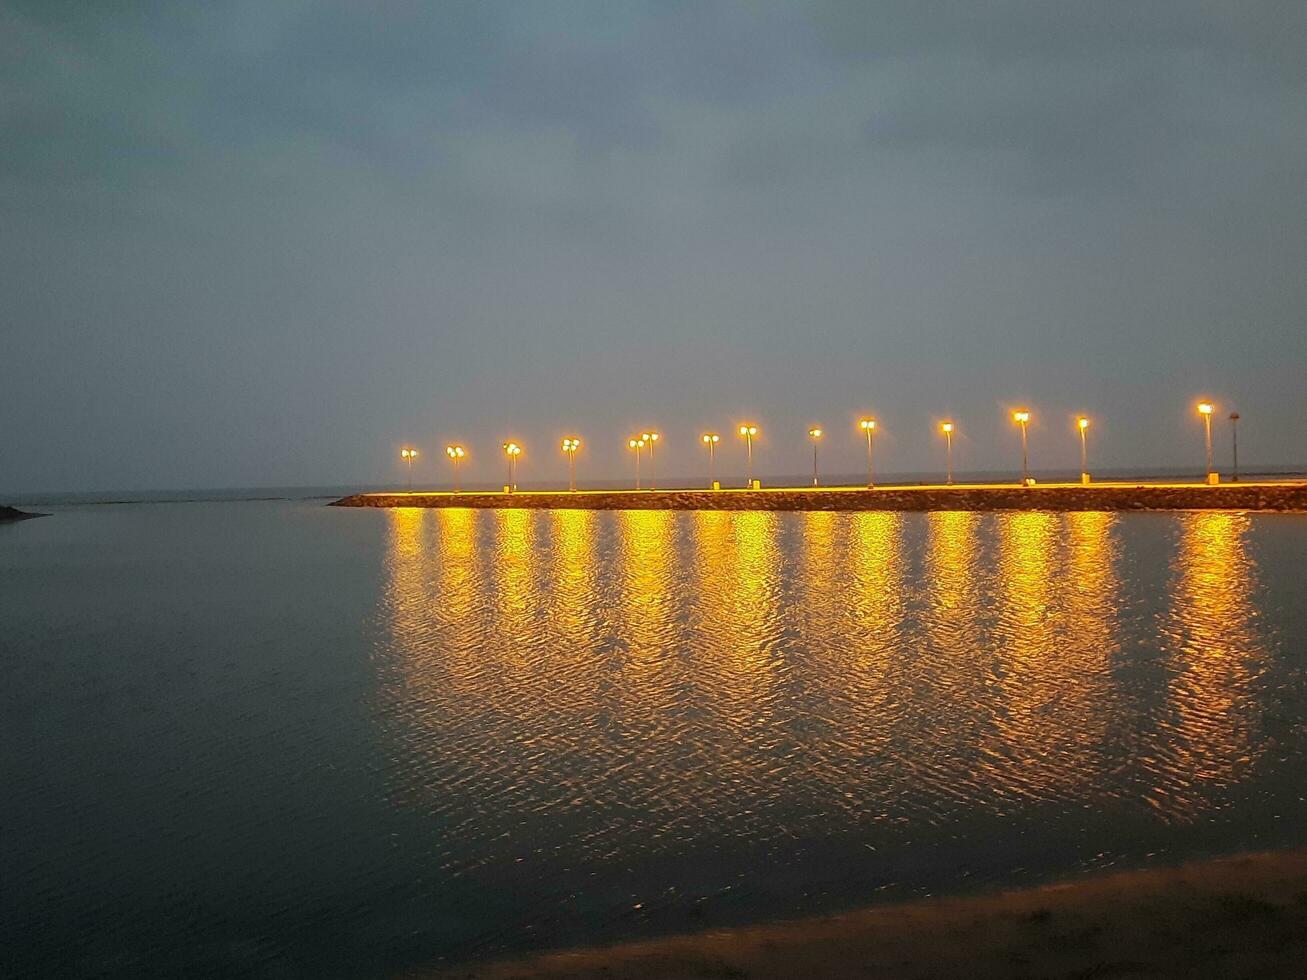 Beautiful morning view of Al Qunfudhah Beach, Saudi Arabia. The lights on the beach are creating a beautiful scene in the morning. photo